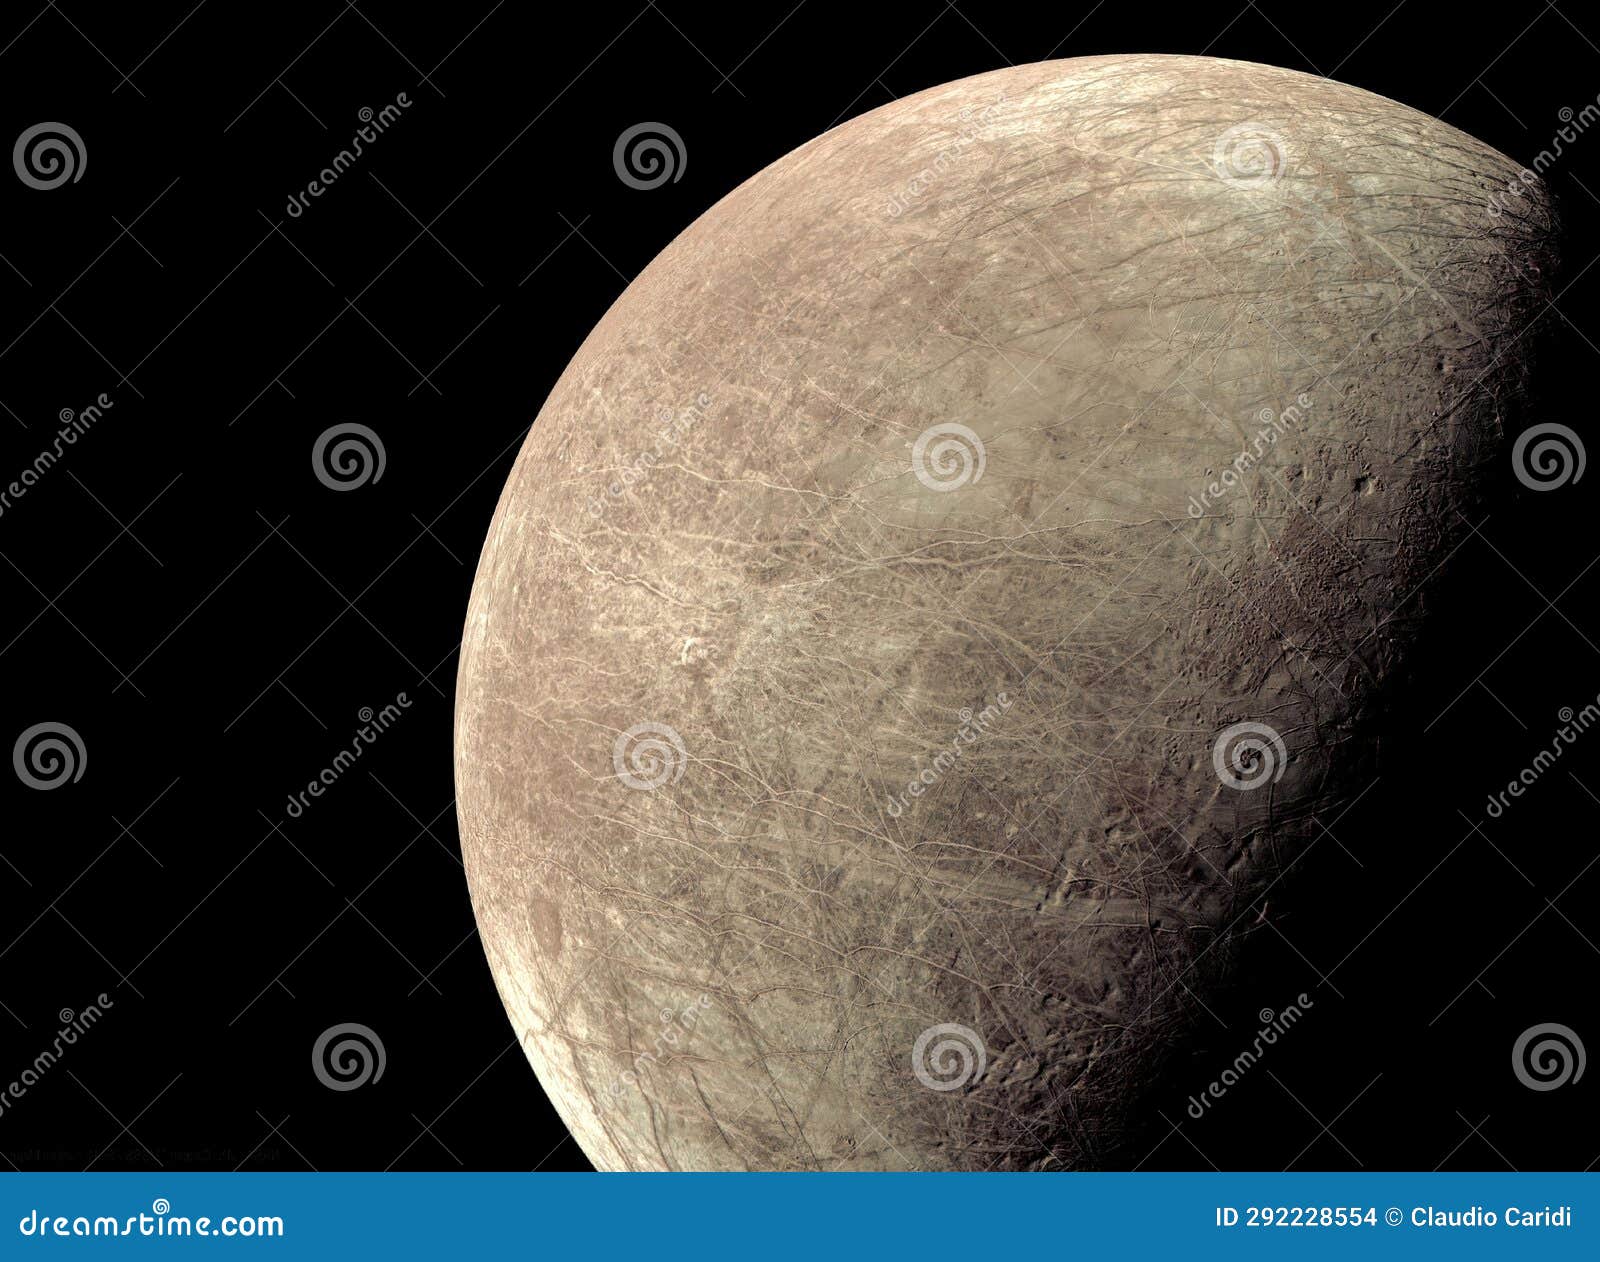 europa, a moon of planet jupiter